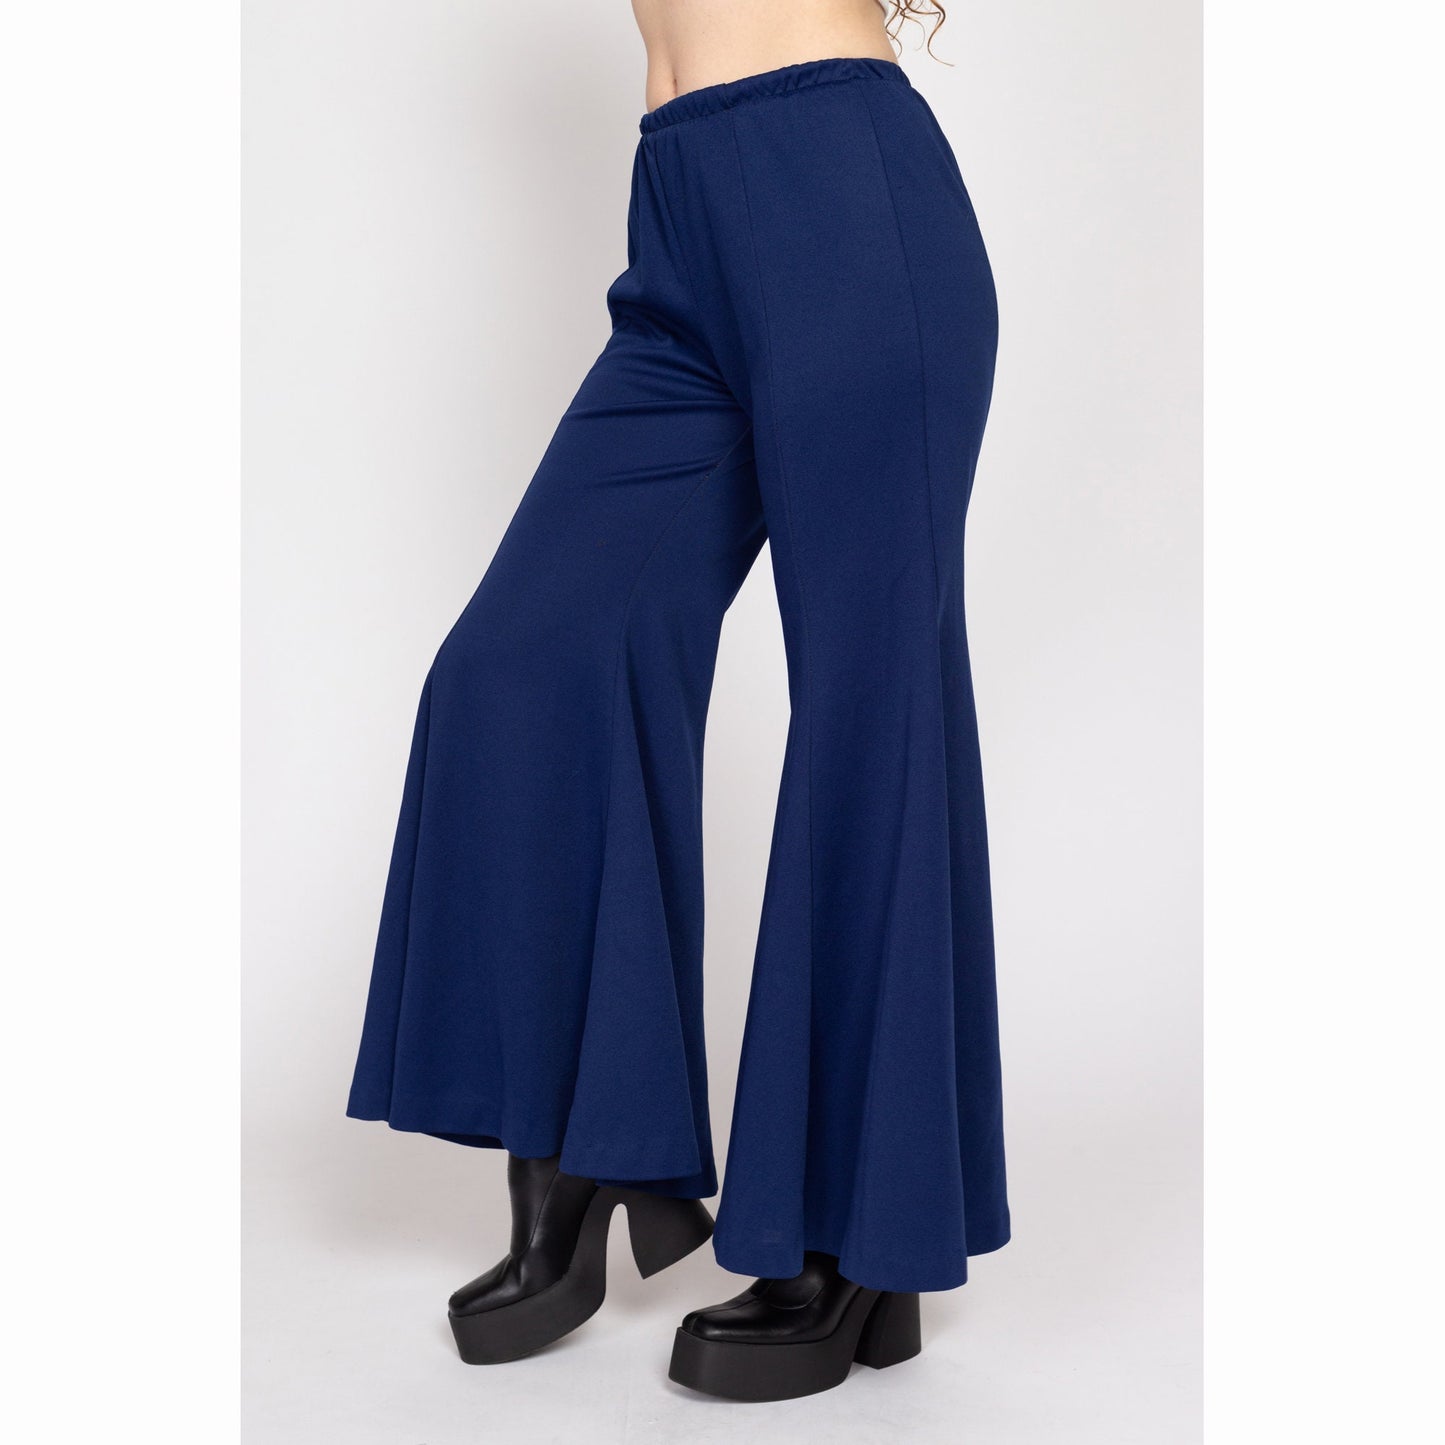 Medium 70s Navy Blue Bell Bottom Pants | Vintage High Waisted Retro Flared Elastic Disco Loungewear Trousers